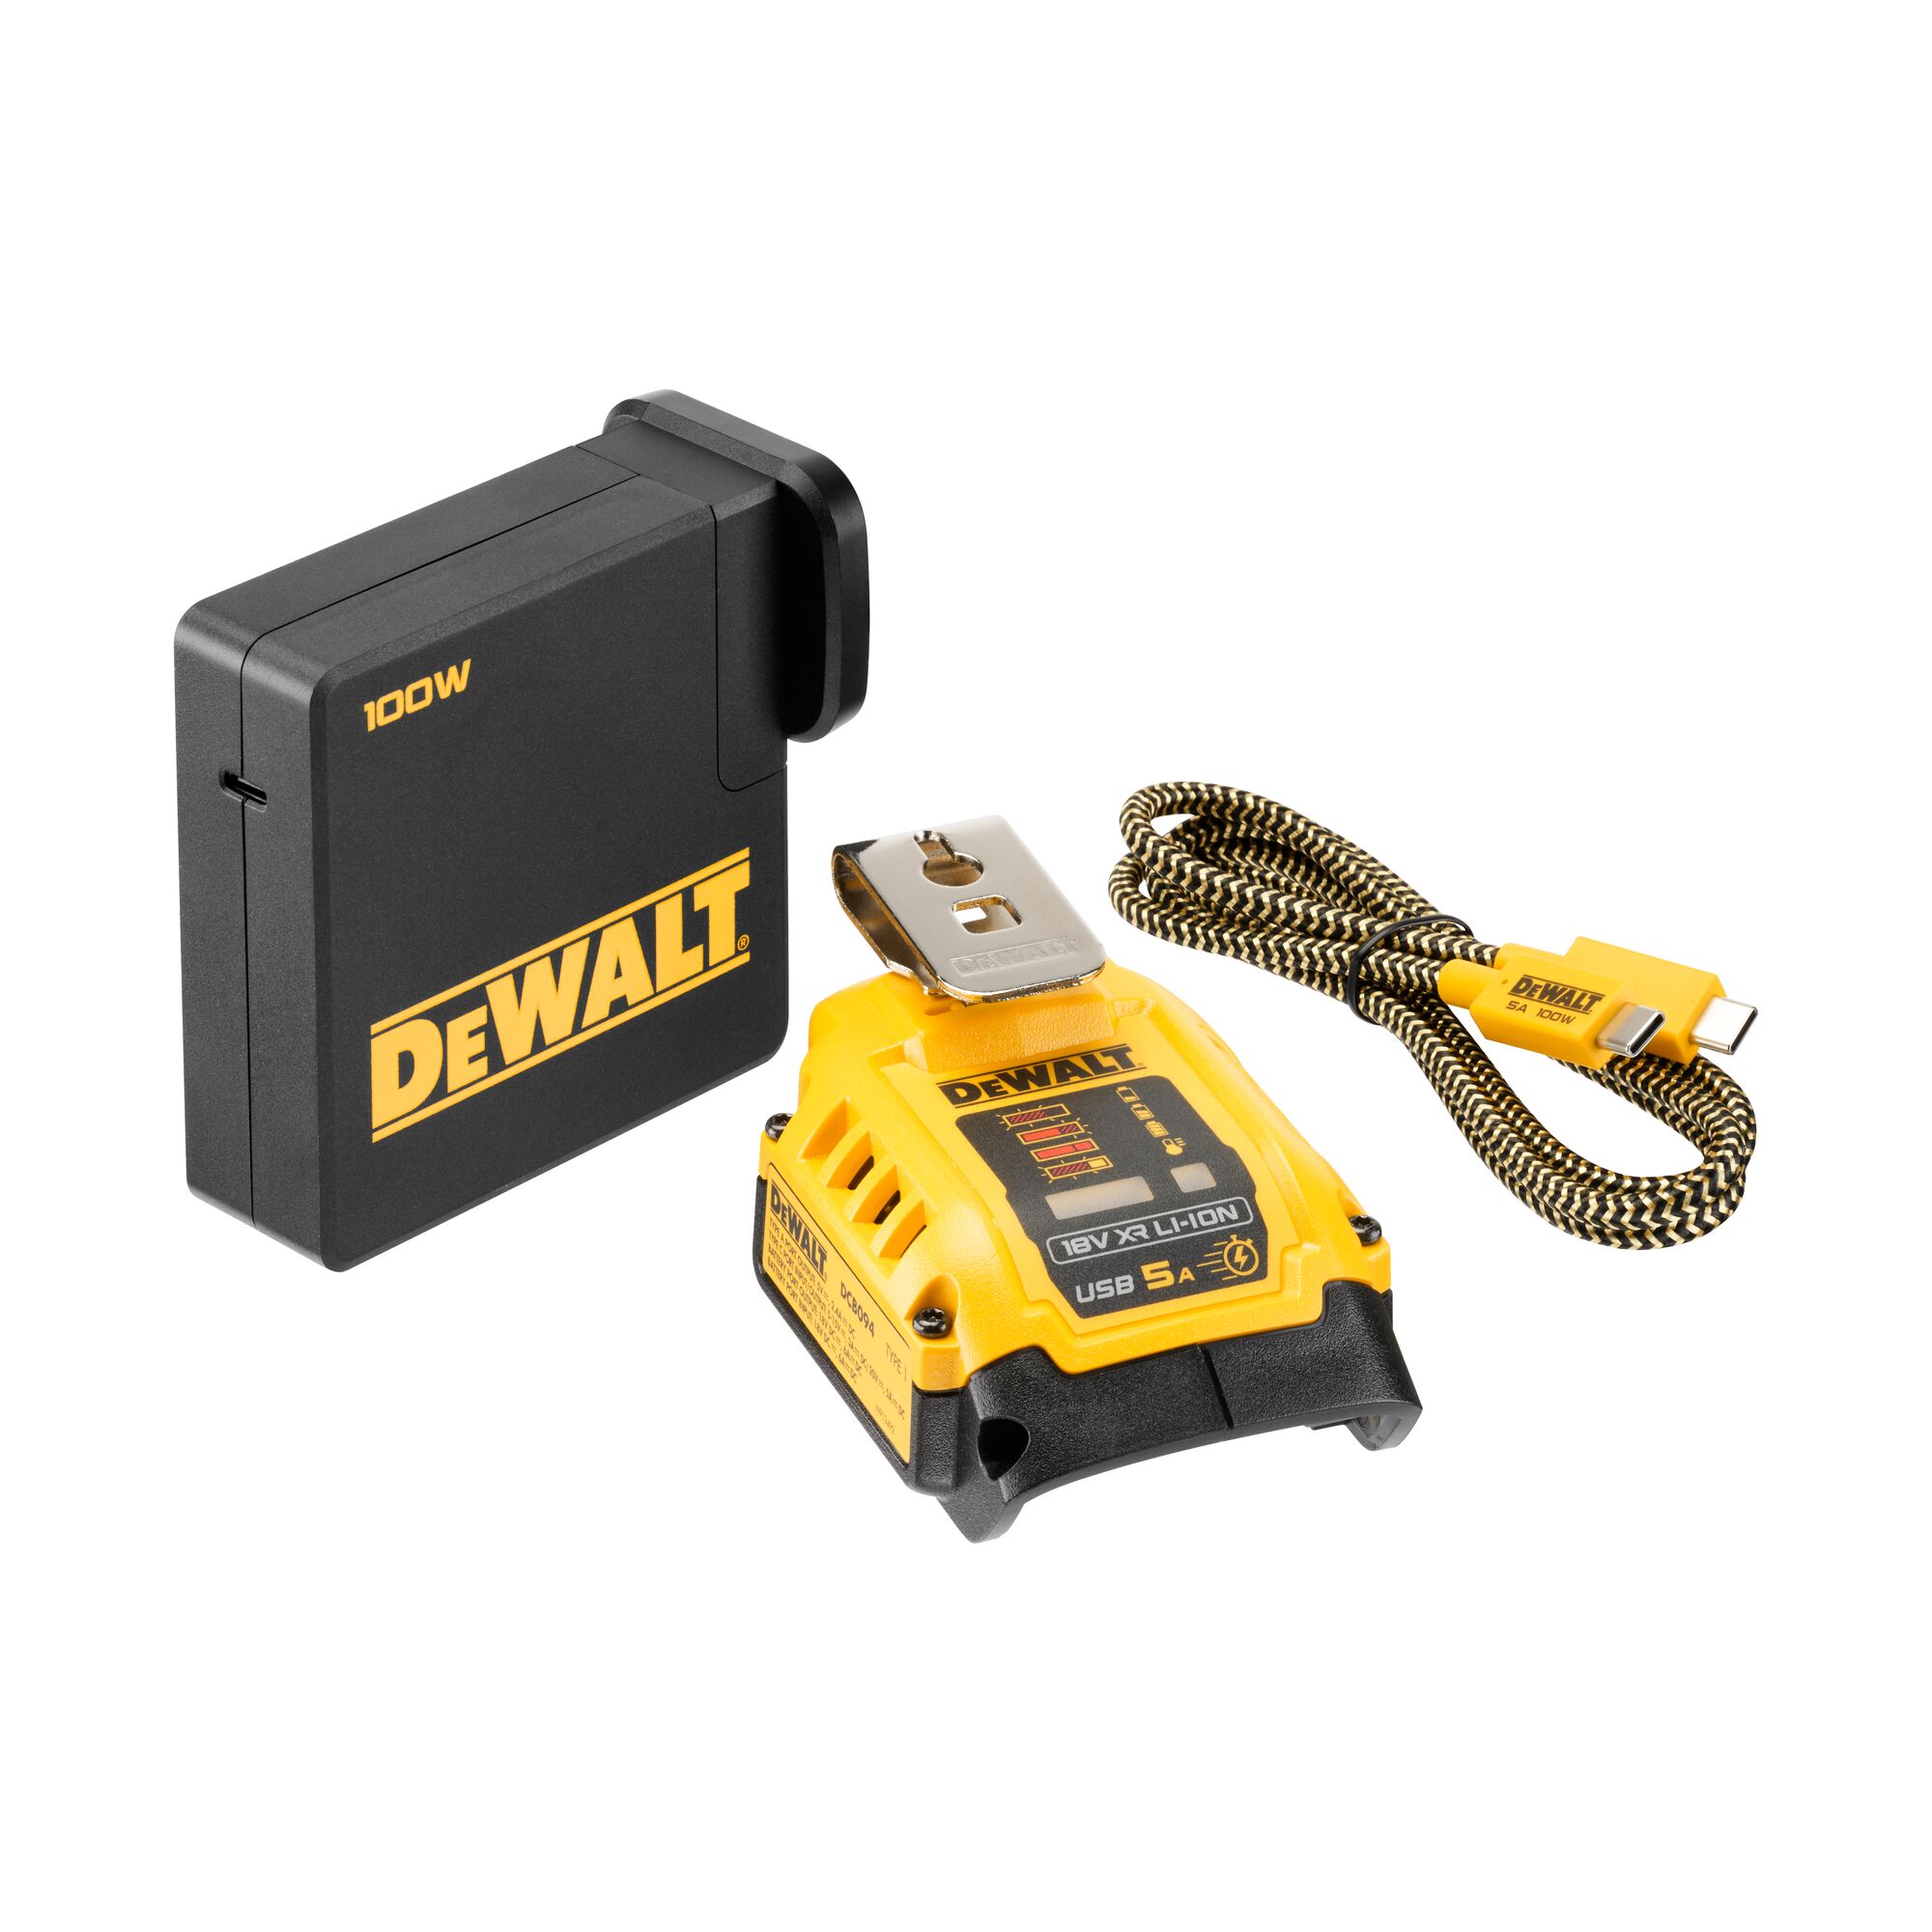 USB Mobile battery charger adaptor for DeWalt DCB120 DCB121 DCB140 DCB200 DCB18 